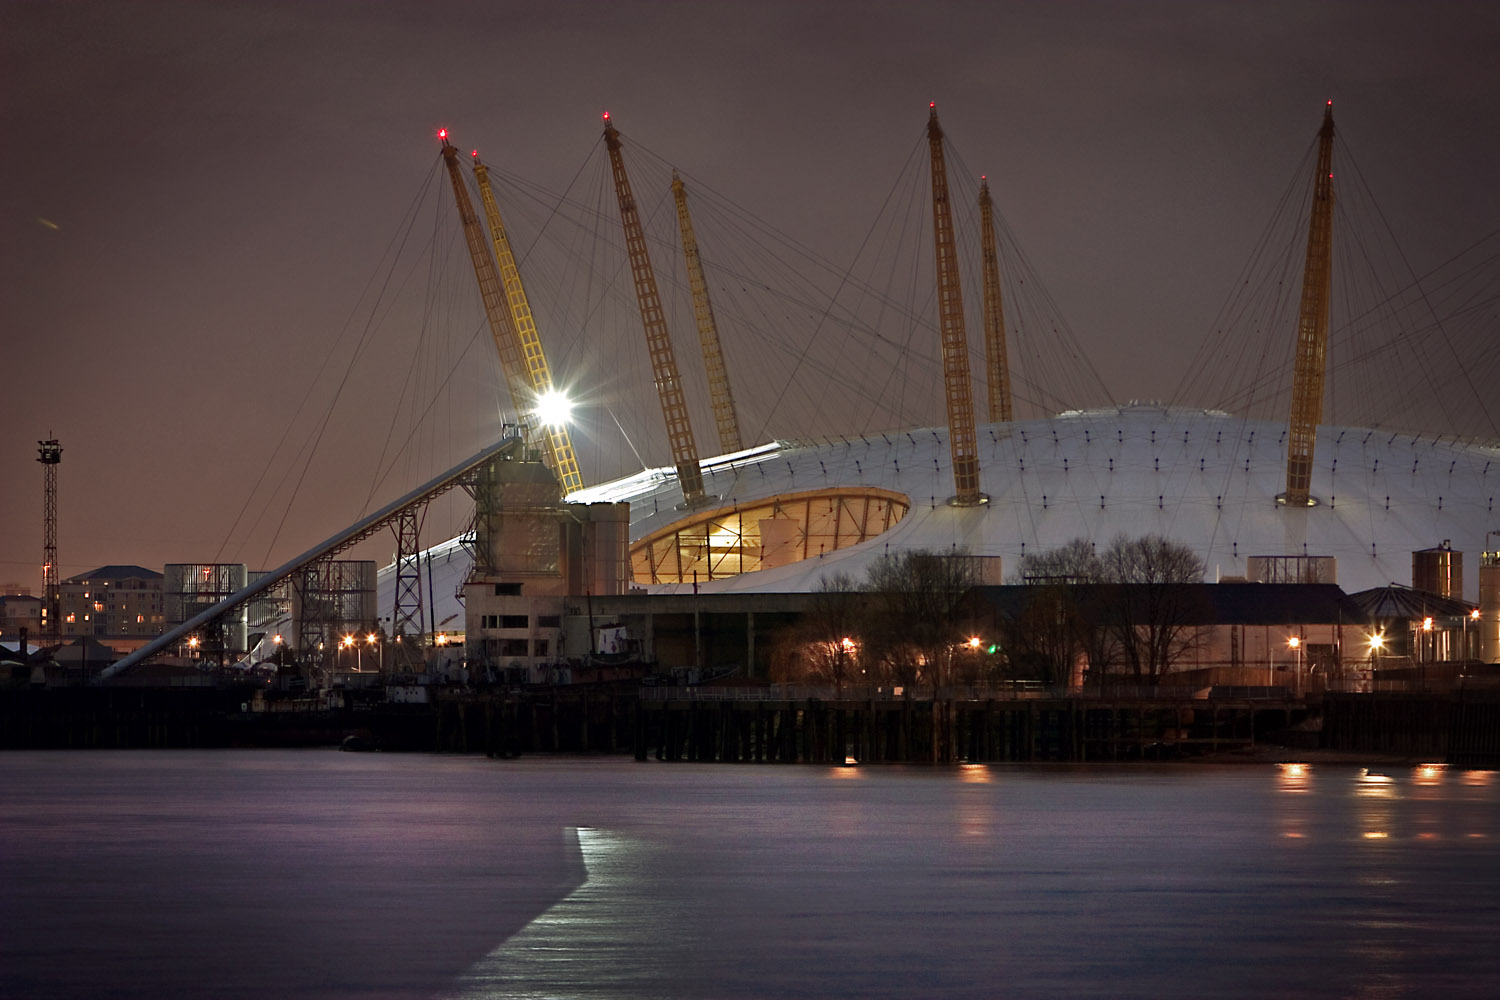 Millennium Dome/O2 Arena, London, UK